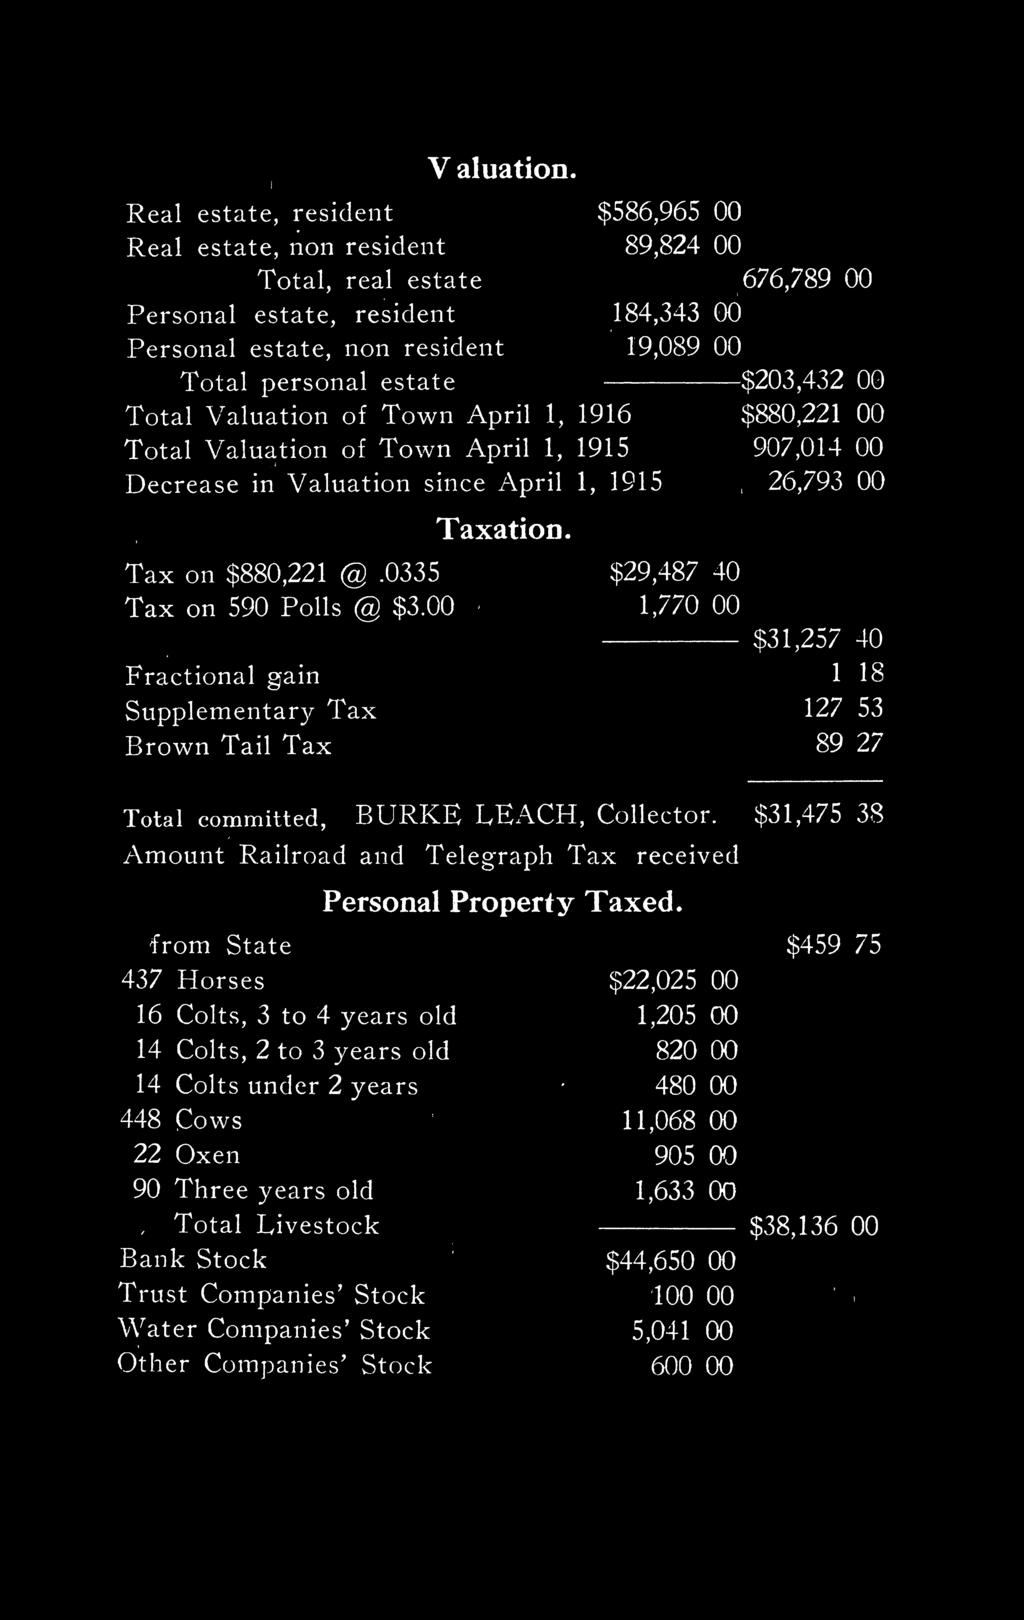 personal estate ---------------$203,432 00 Total Valuation of Town April 1, 1916 $880,221 00 Total Valuation of Town April 1, 1915 907,014 00, i Decrease in Valuation since April 1, 1915, 26,793 00?